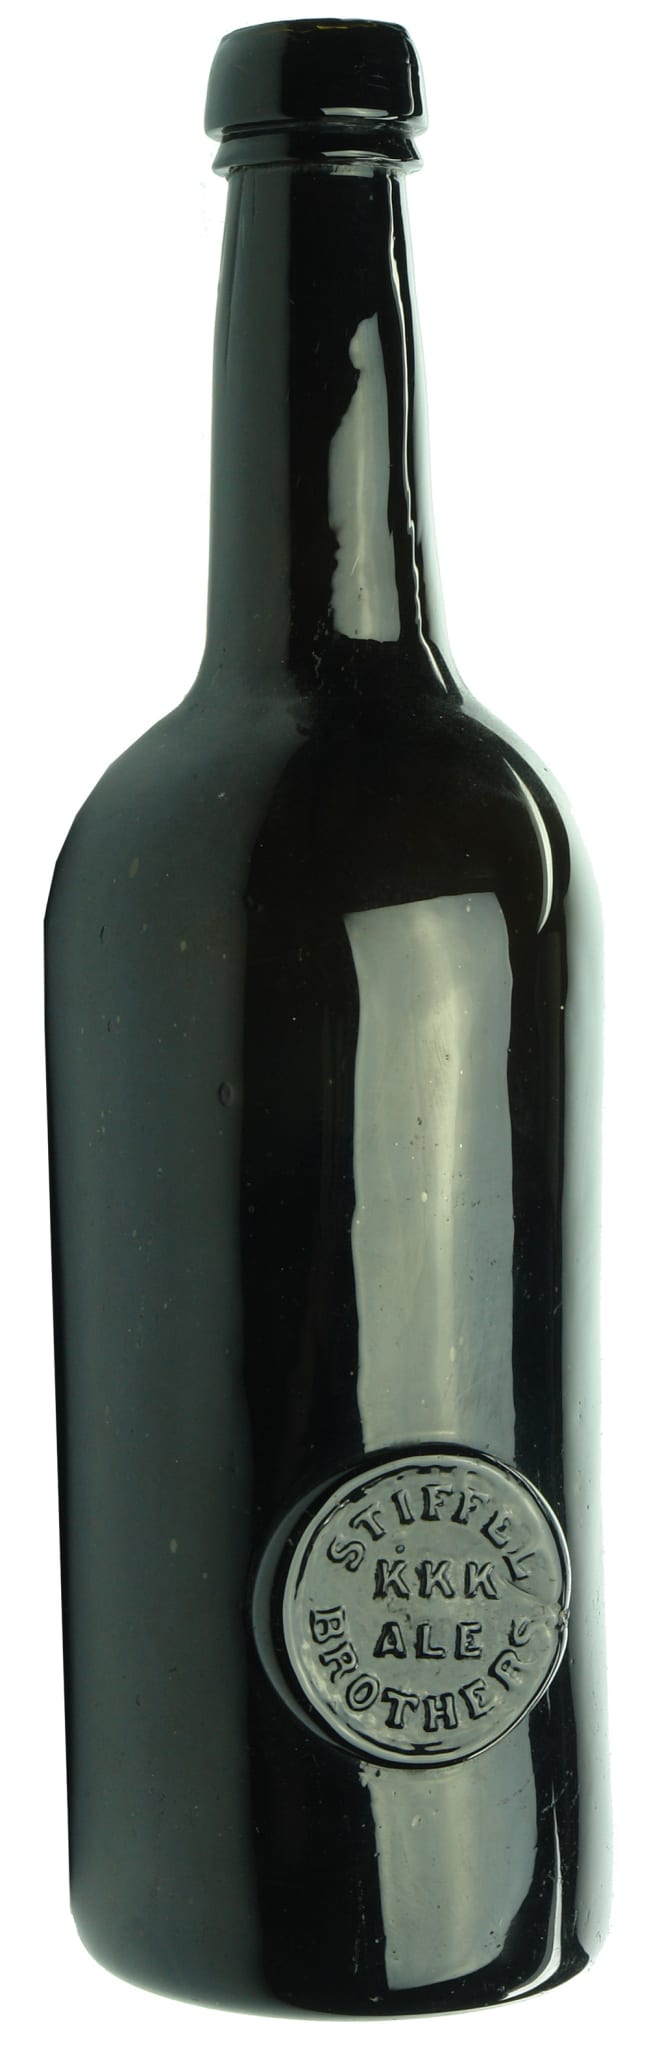 Stiffel Bros KKK (no not that one) Ale Black Glass Bottle